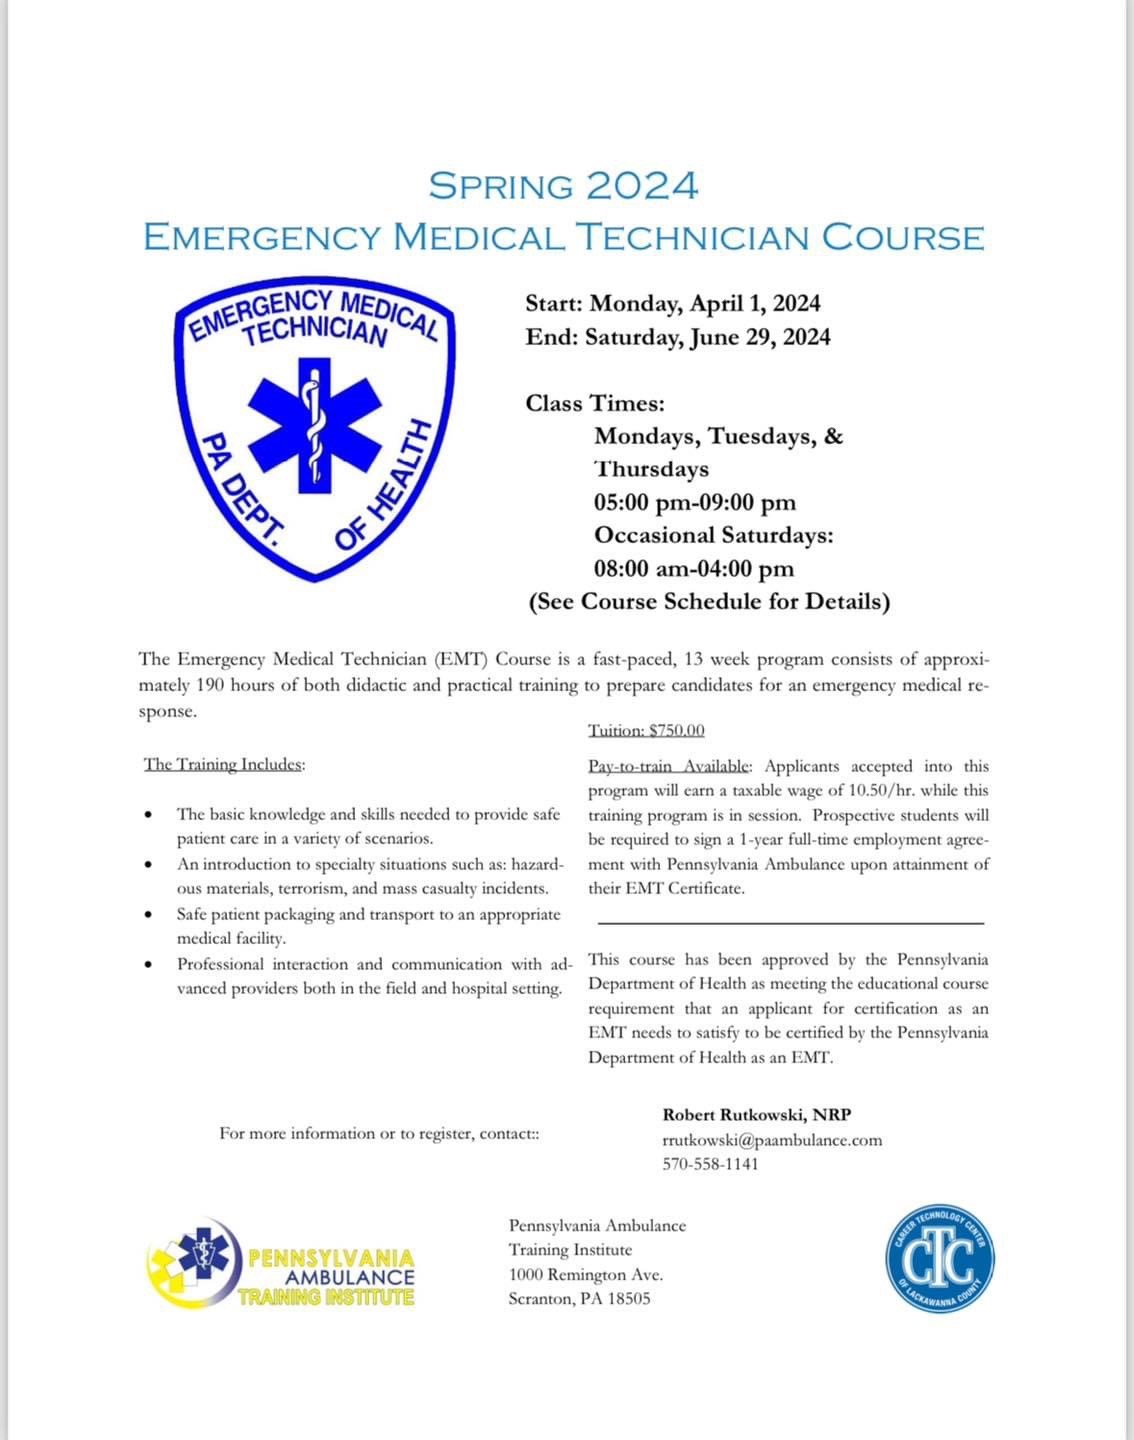 Emergency Medical Technician (EMT) Certification Course